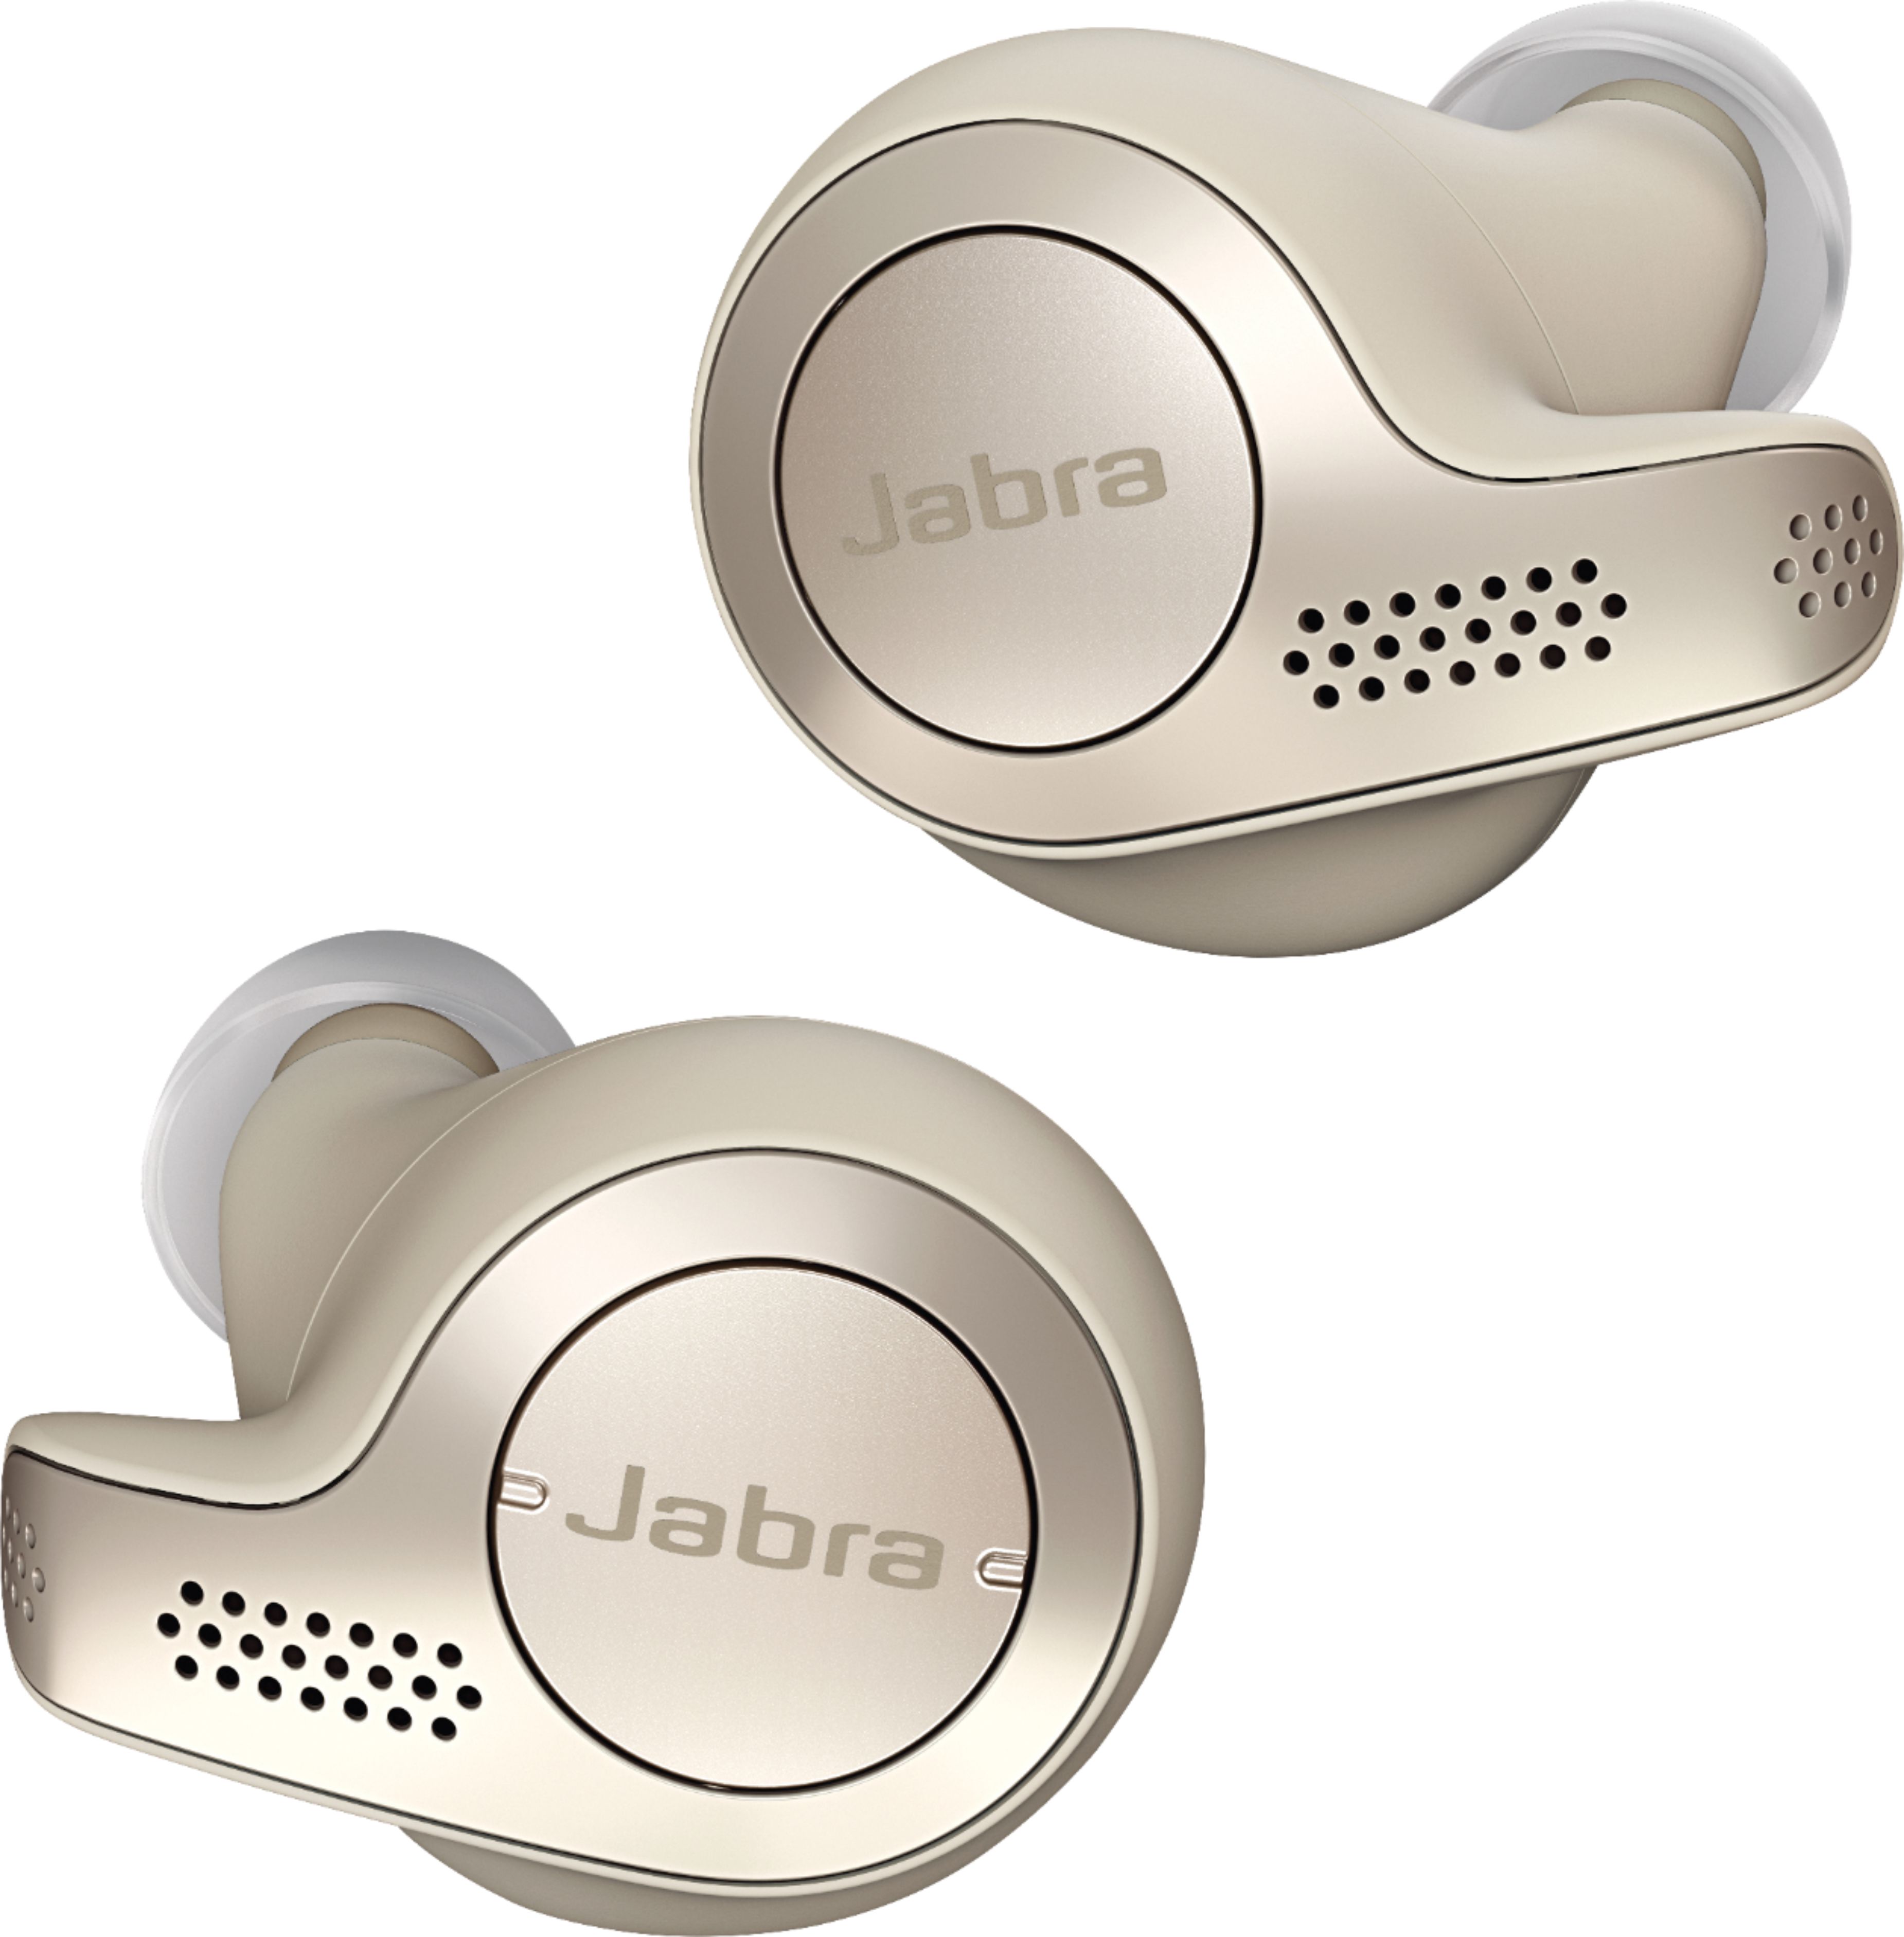 Angle View: Jabra - Elite 65t True Wireless Earbud Headphones - Beige/Gold